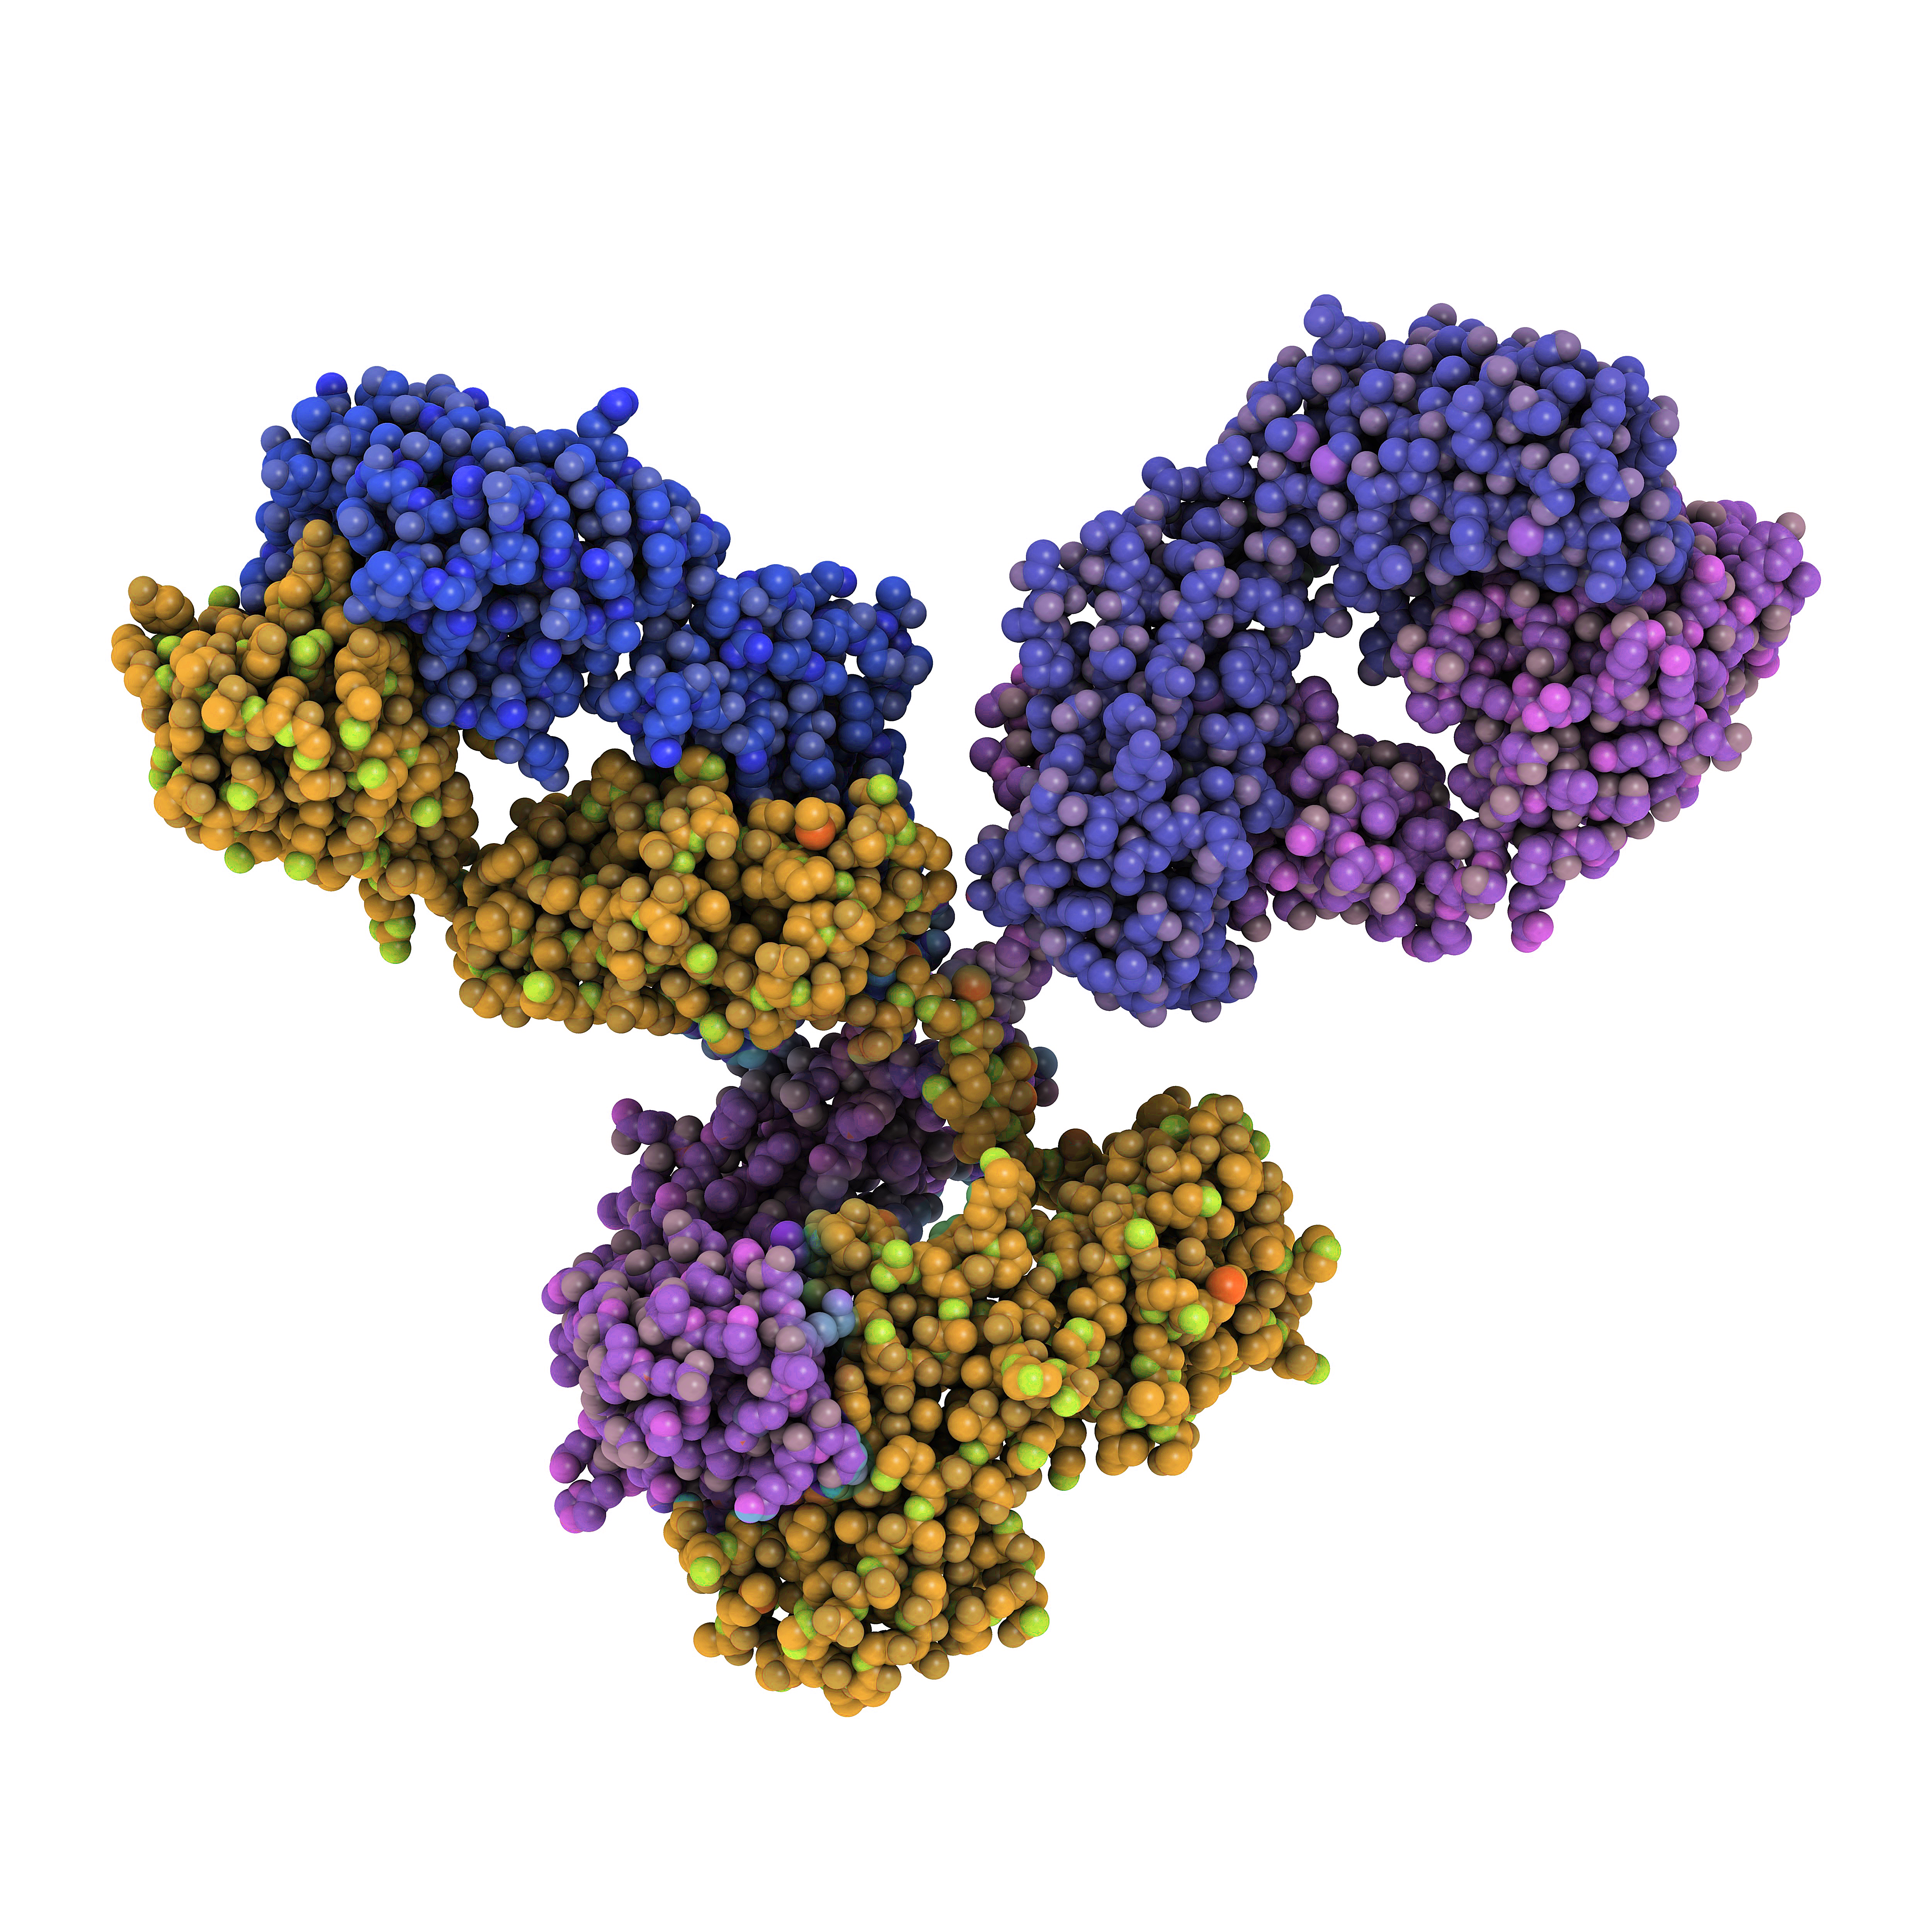 Antibody Biomolecules